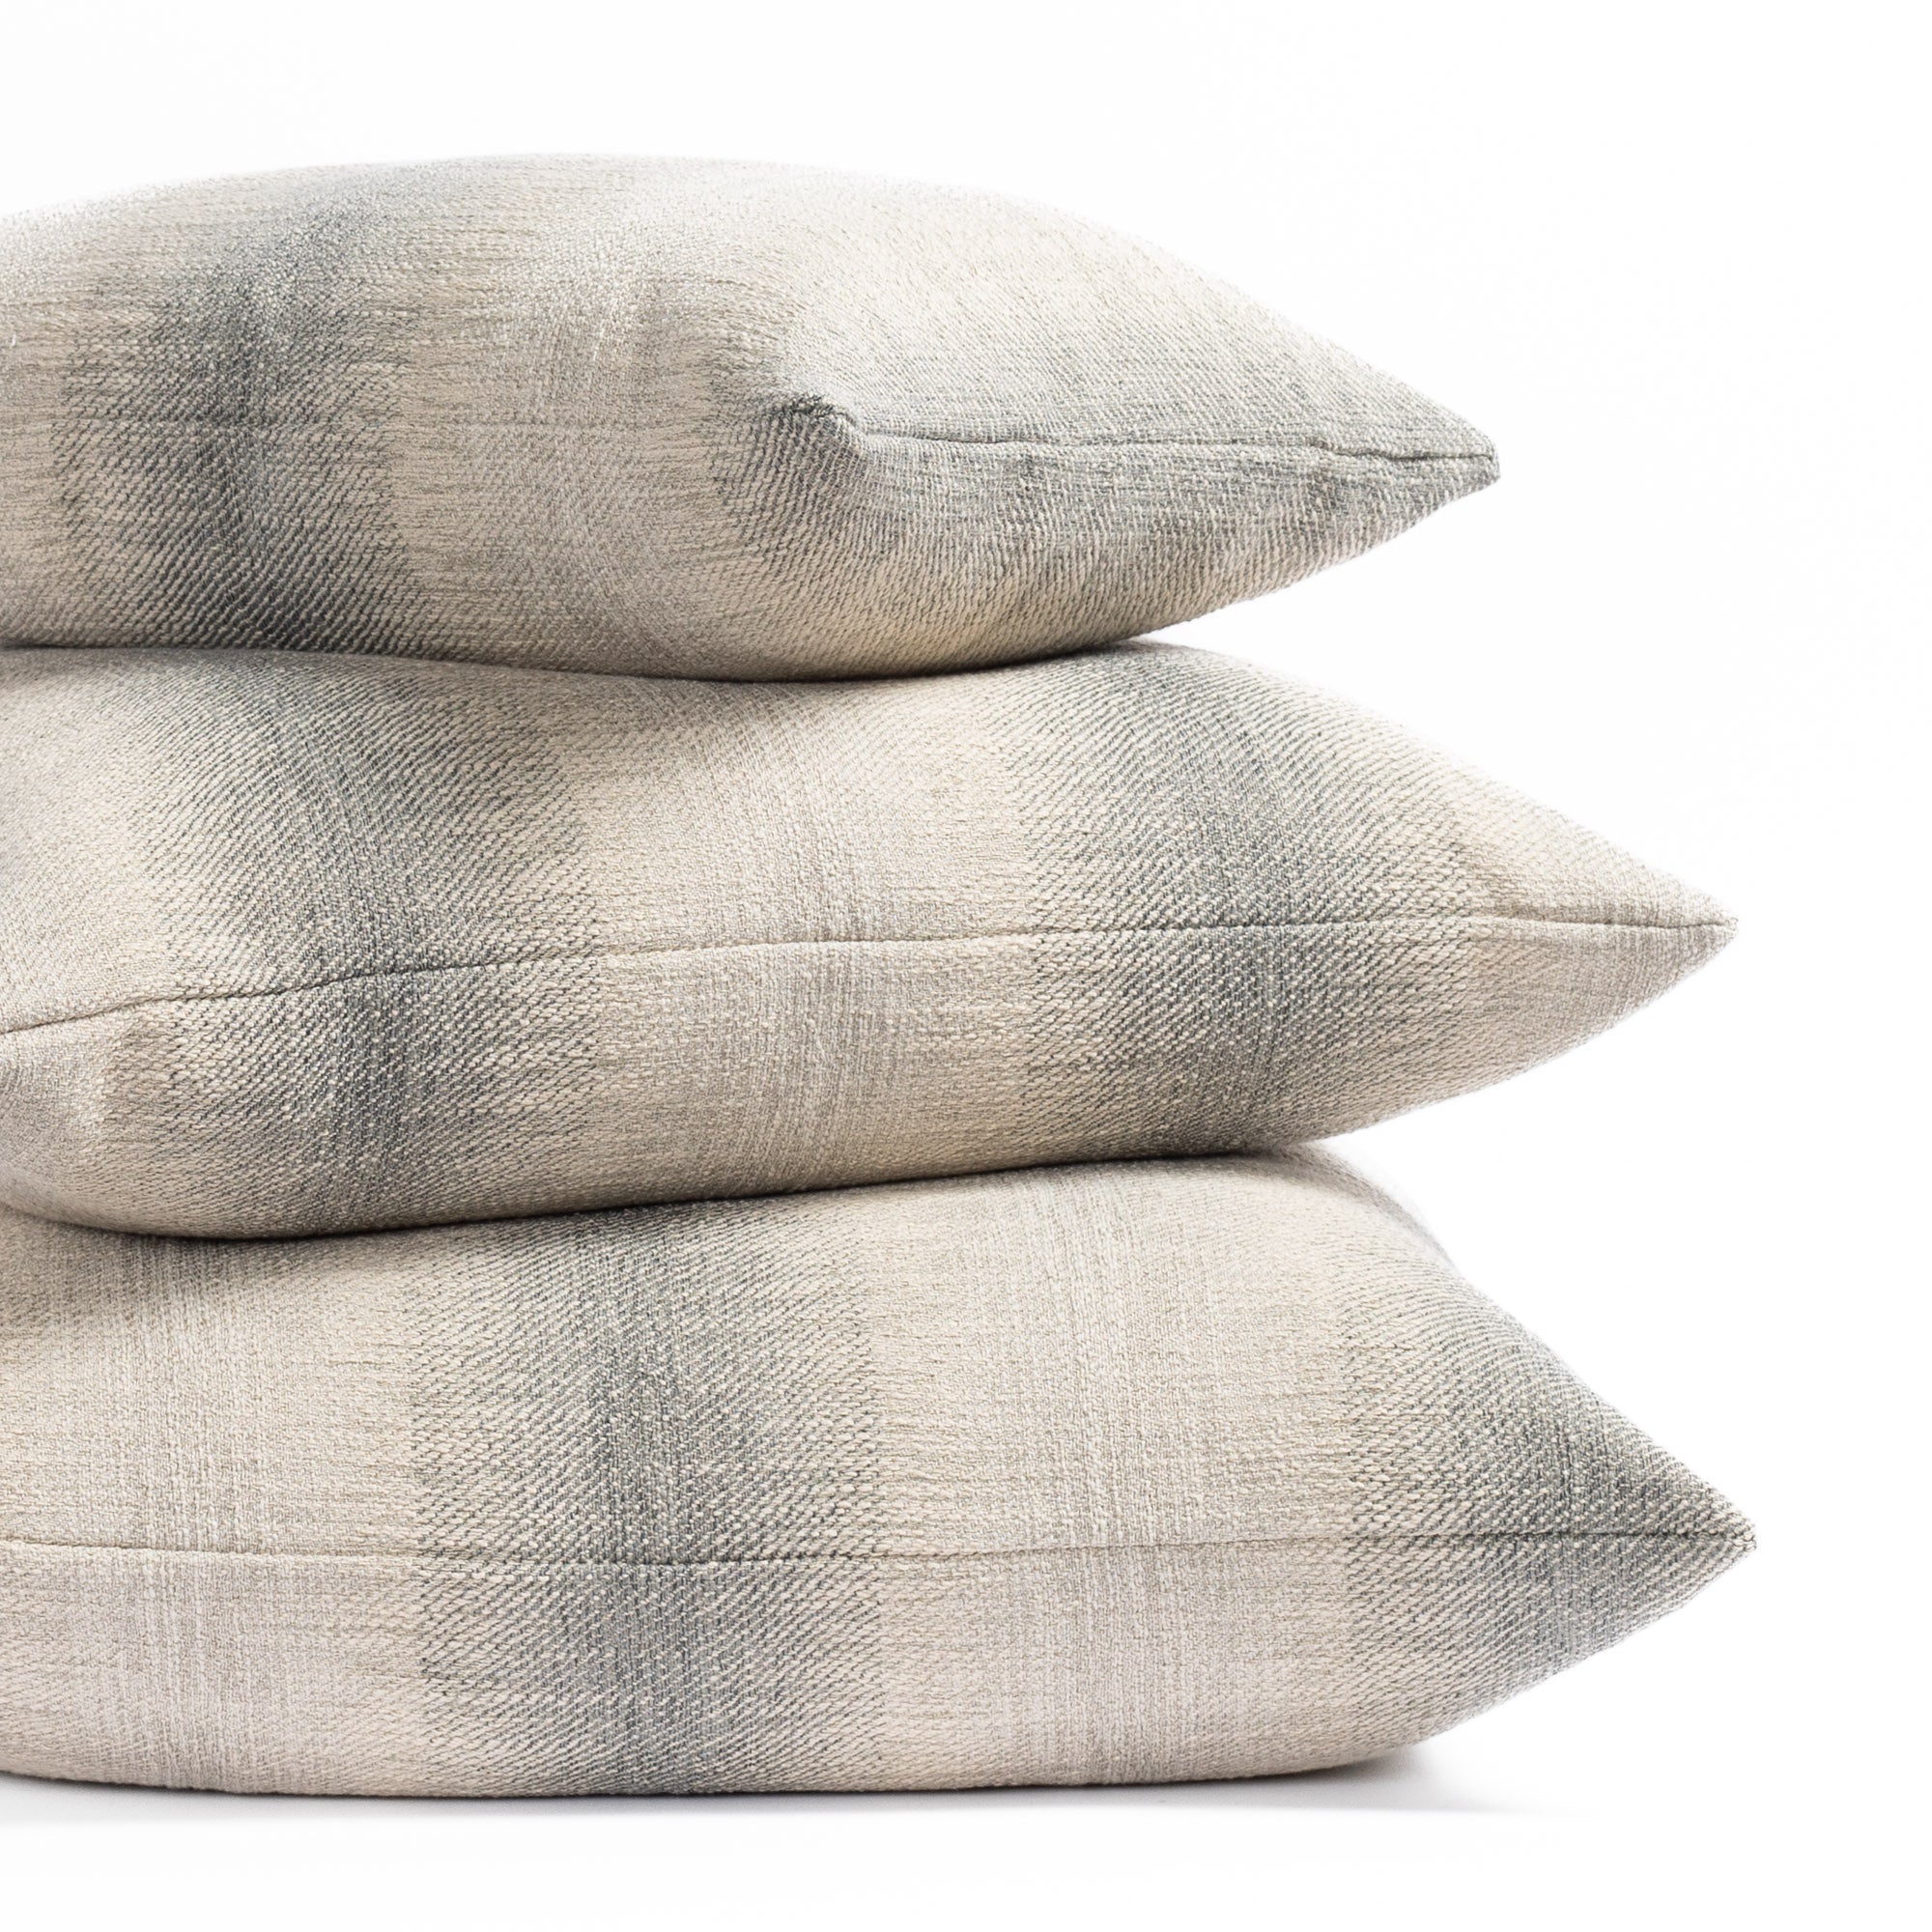 smokey blue and sandy grey ombré stripe throw pillows in three sizes